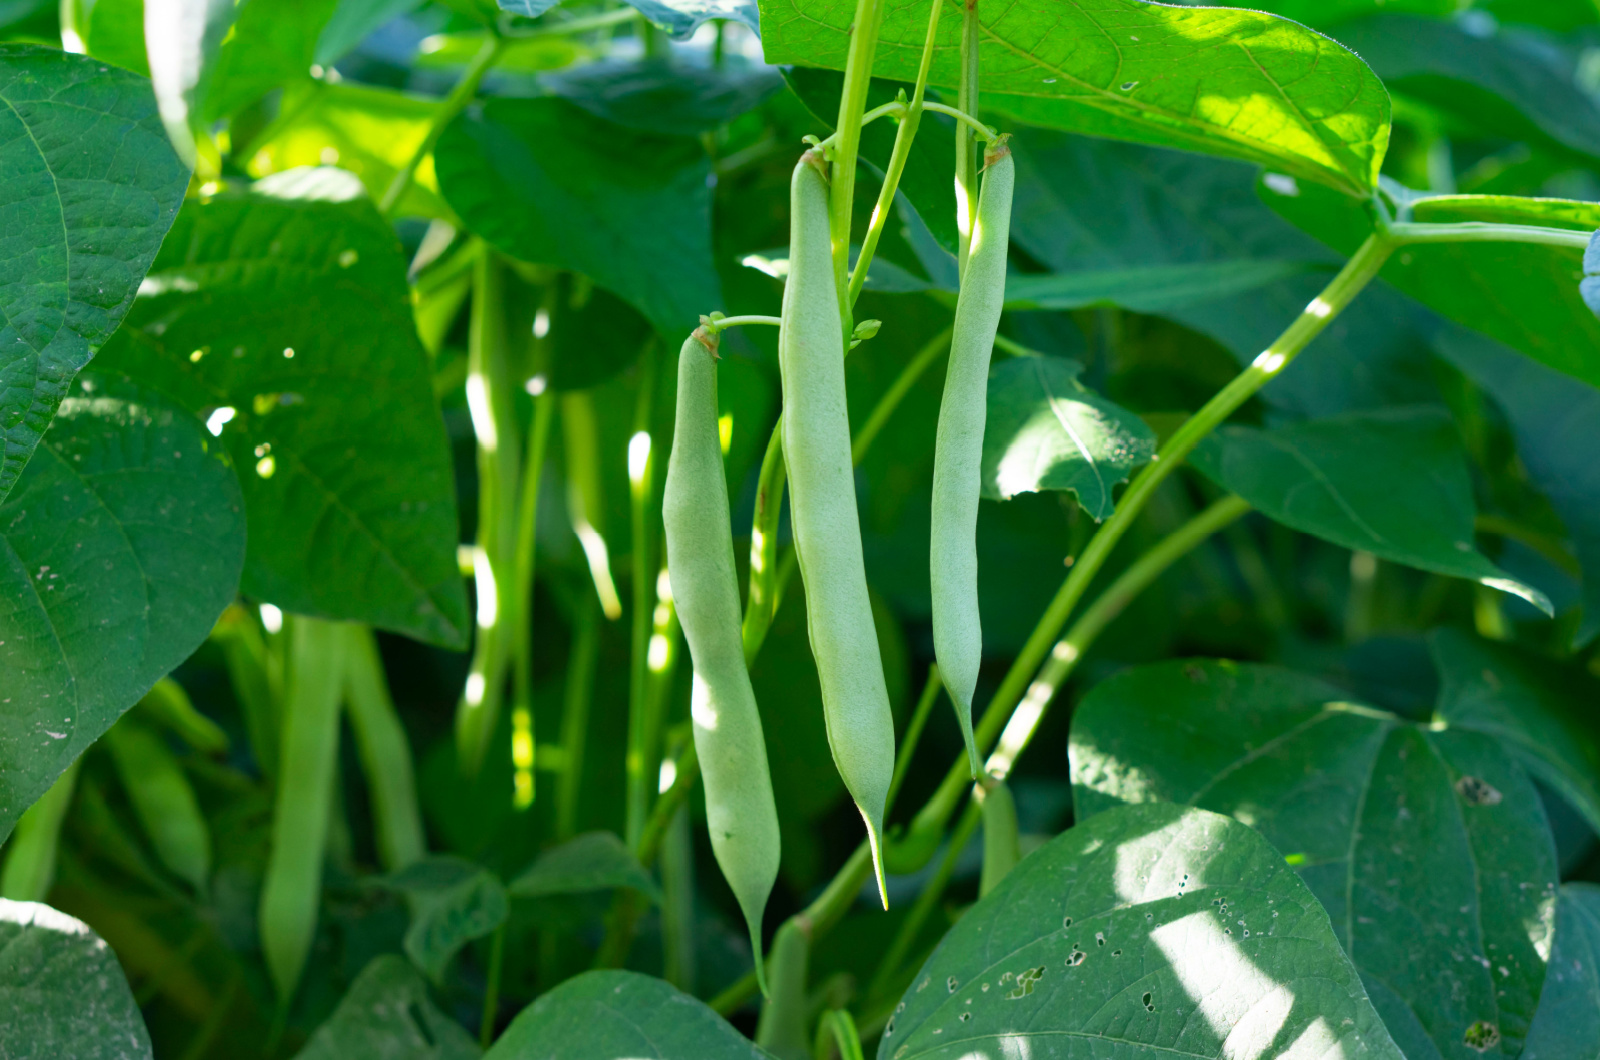 Green beans plant